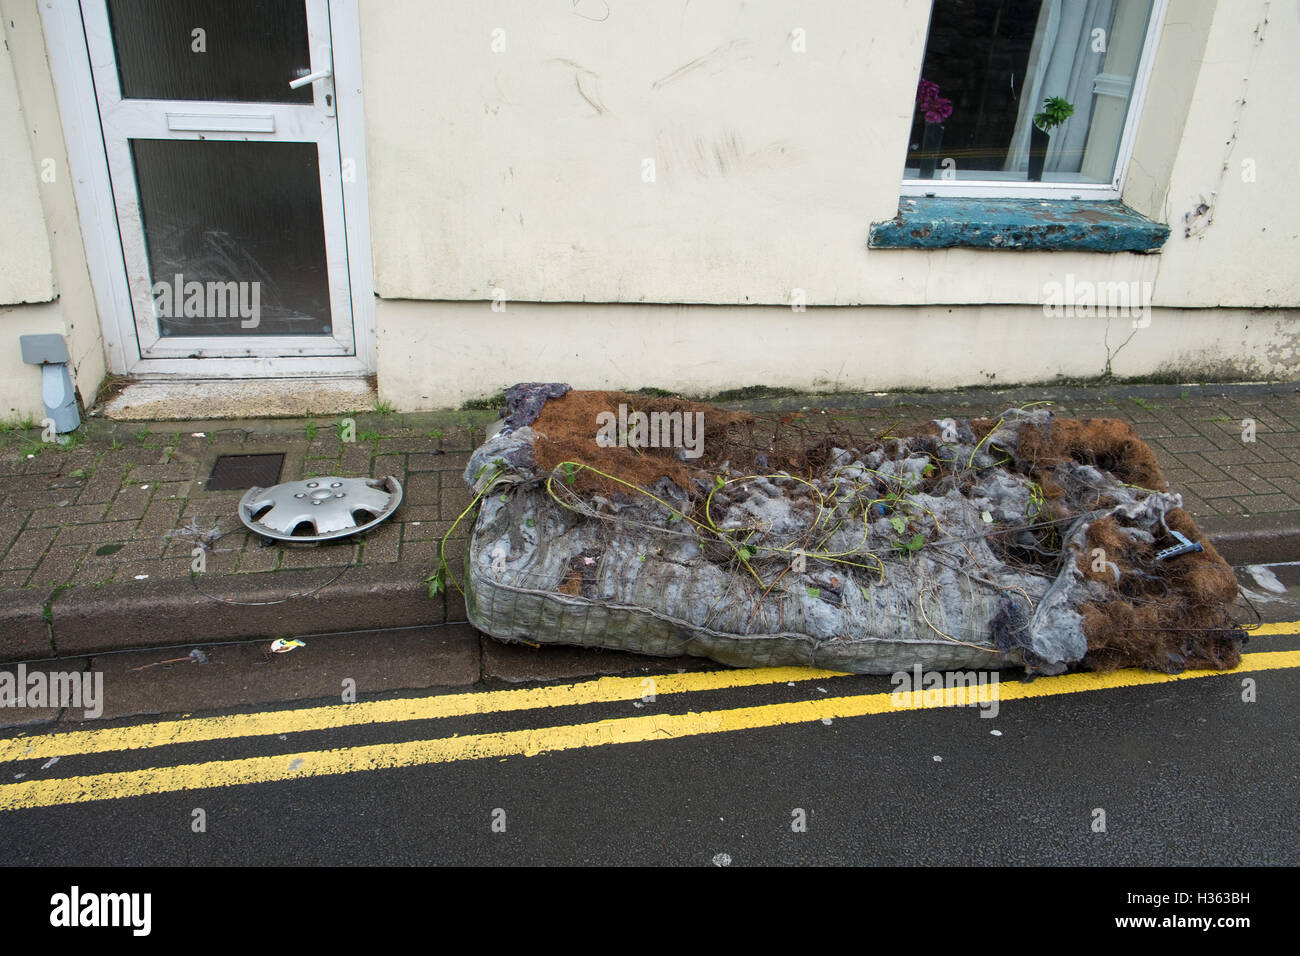 Rotten mattress dumped in the street. Stock Photo